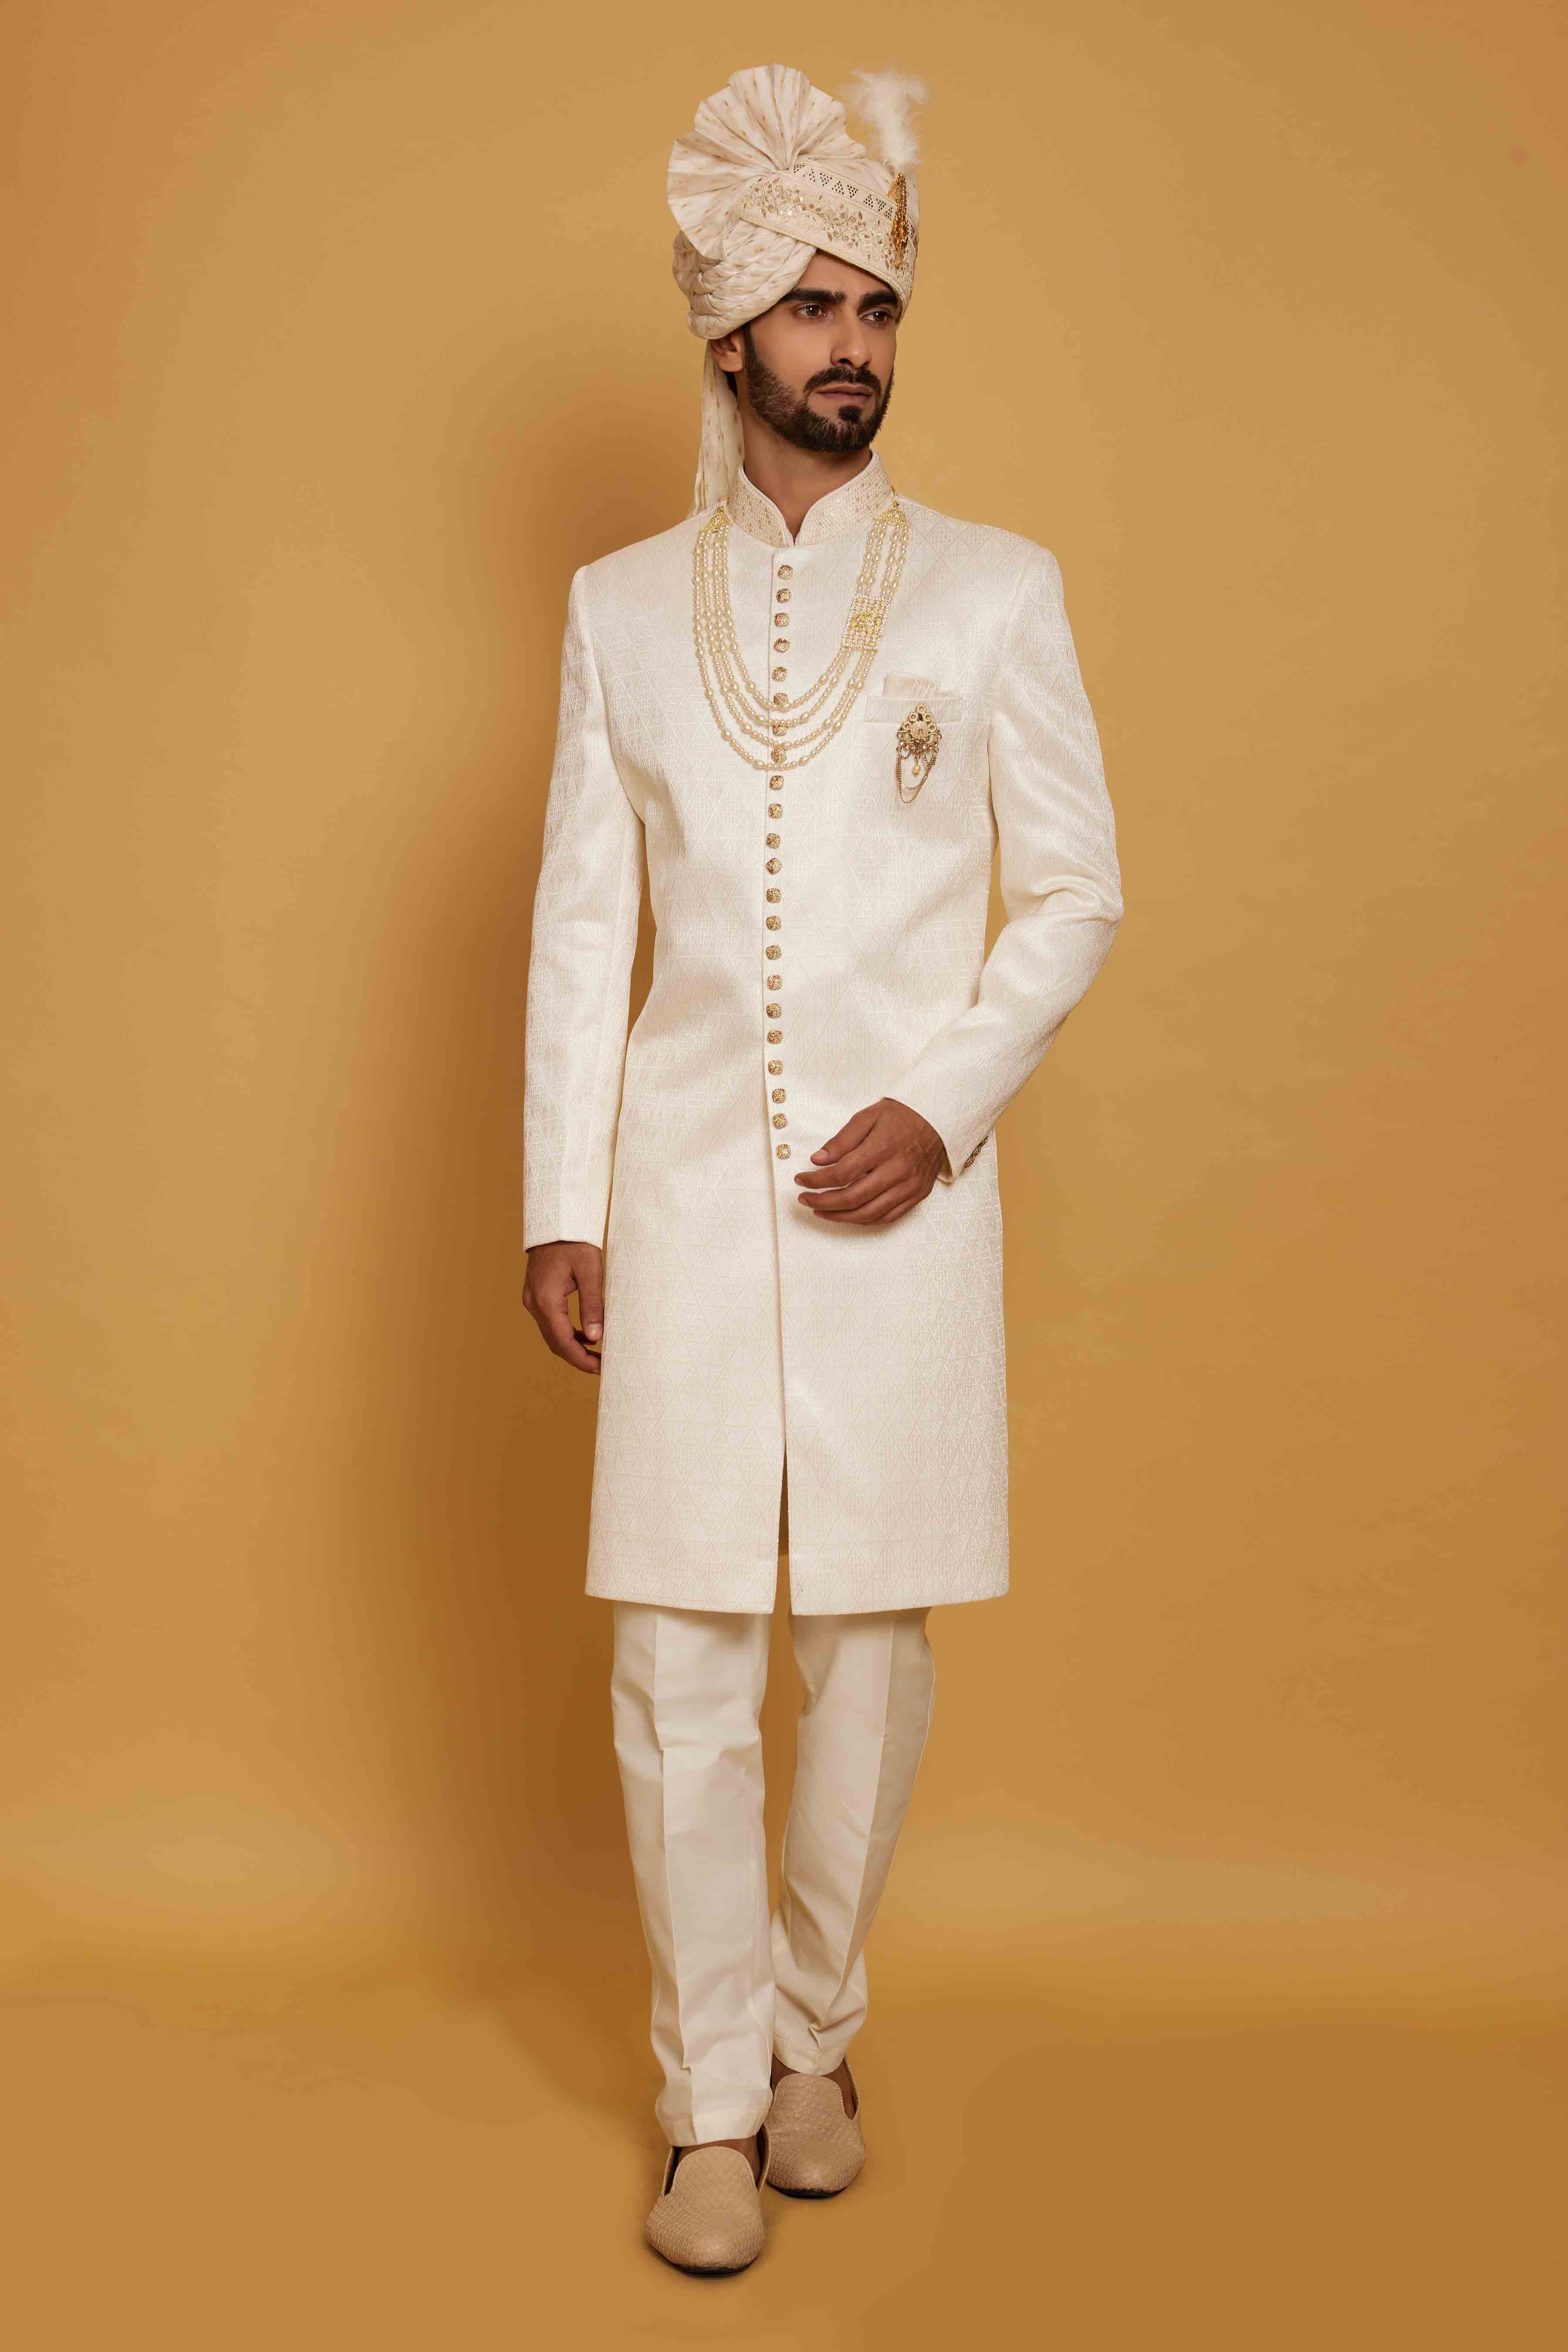 Buy Beige Sherwani Suit With Bold Zardozi Work Online in India @Manyavar -  Sherwani for Men